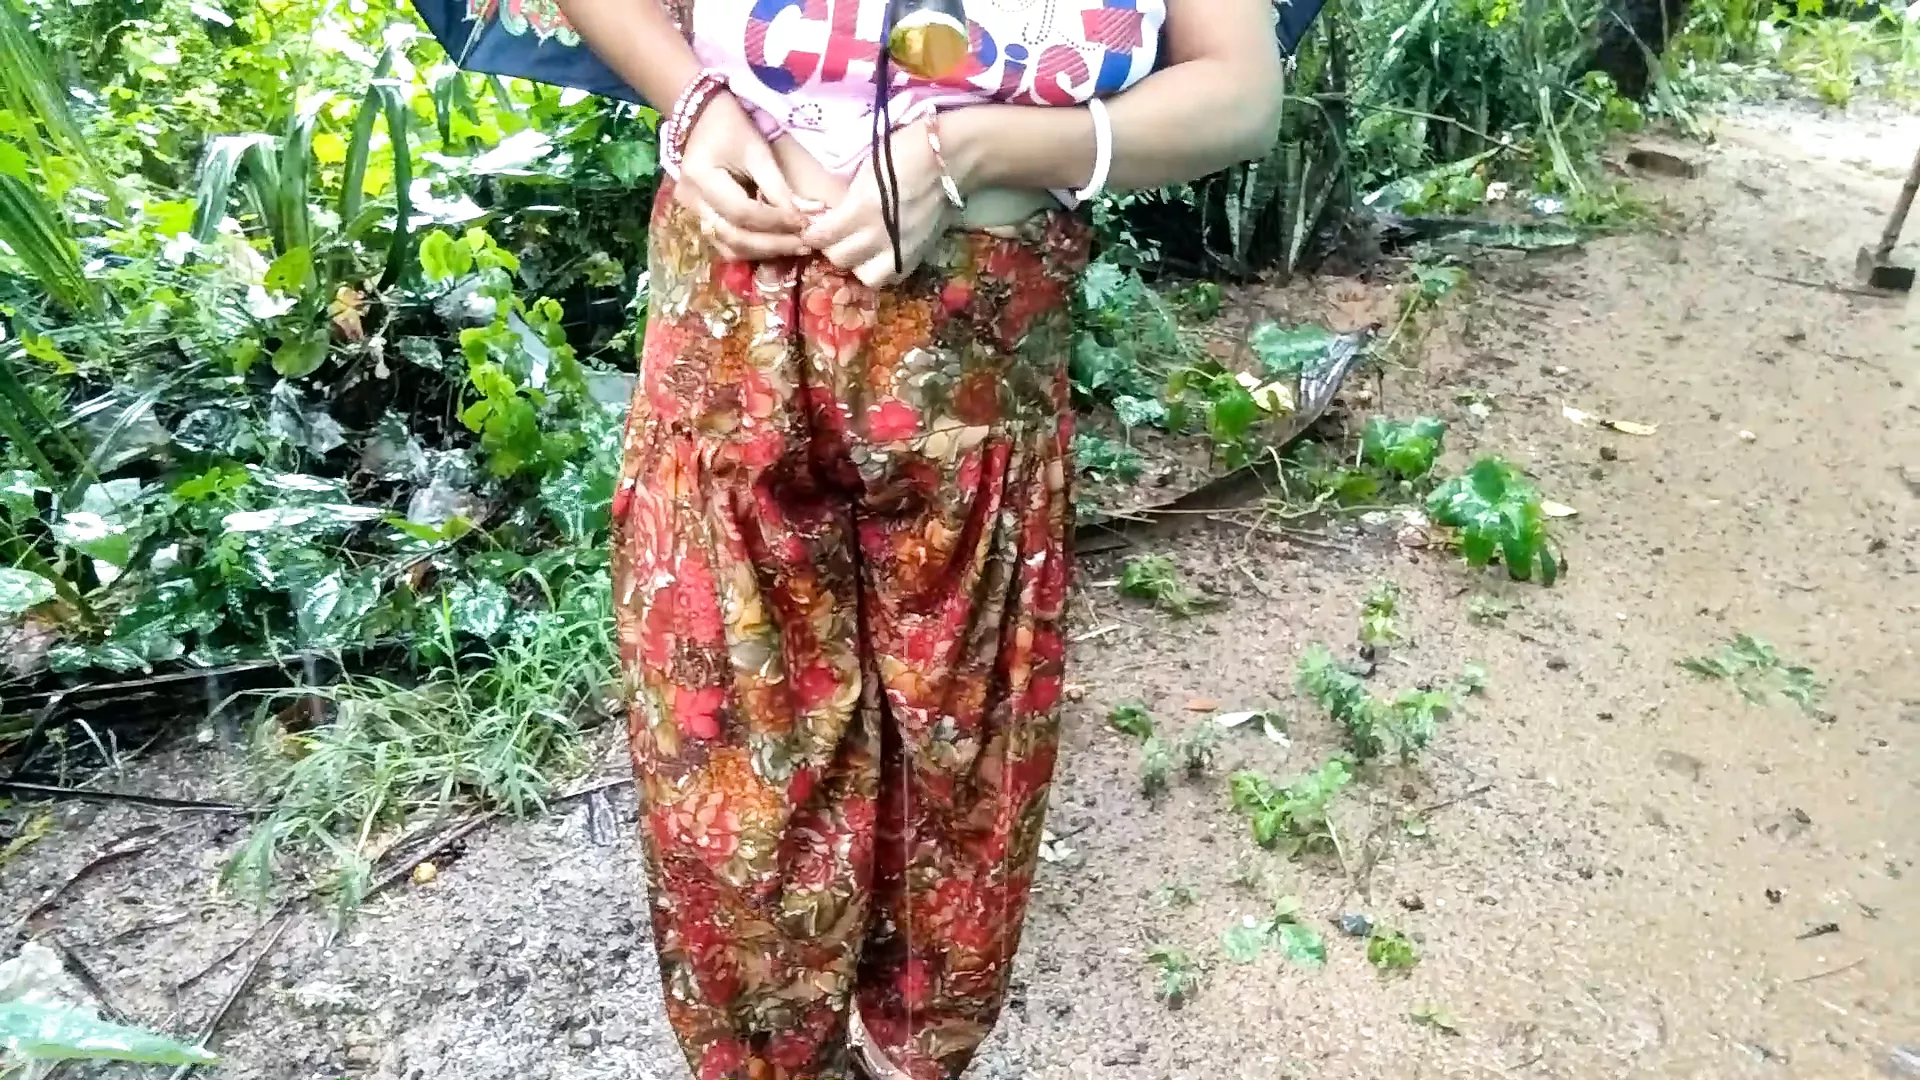 Outdoor Pissing Saree Sex - Desi Indian Bhabhi Outdoor Public Pissing Video Compilation | xHamster